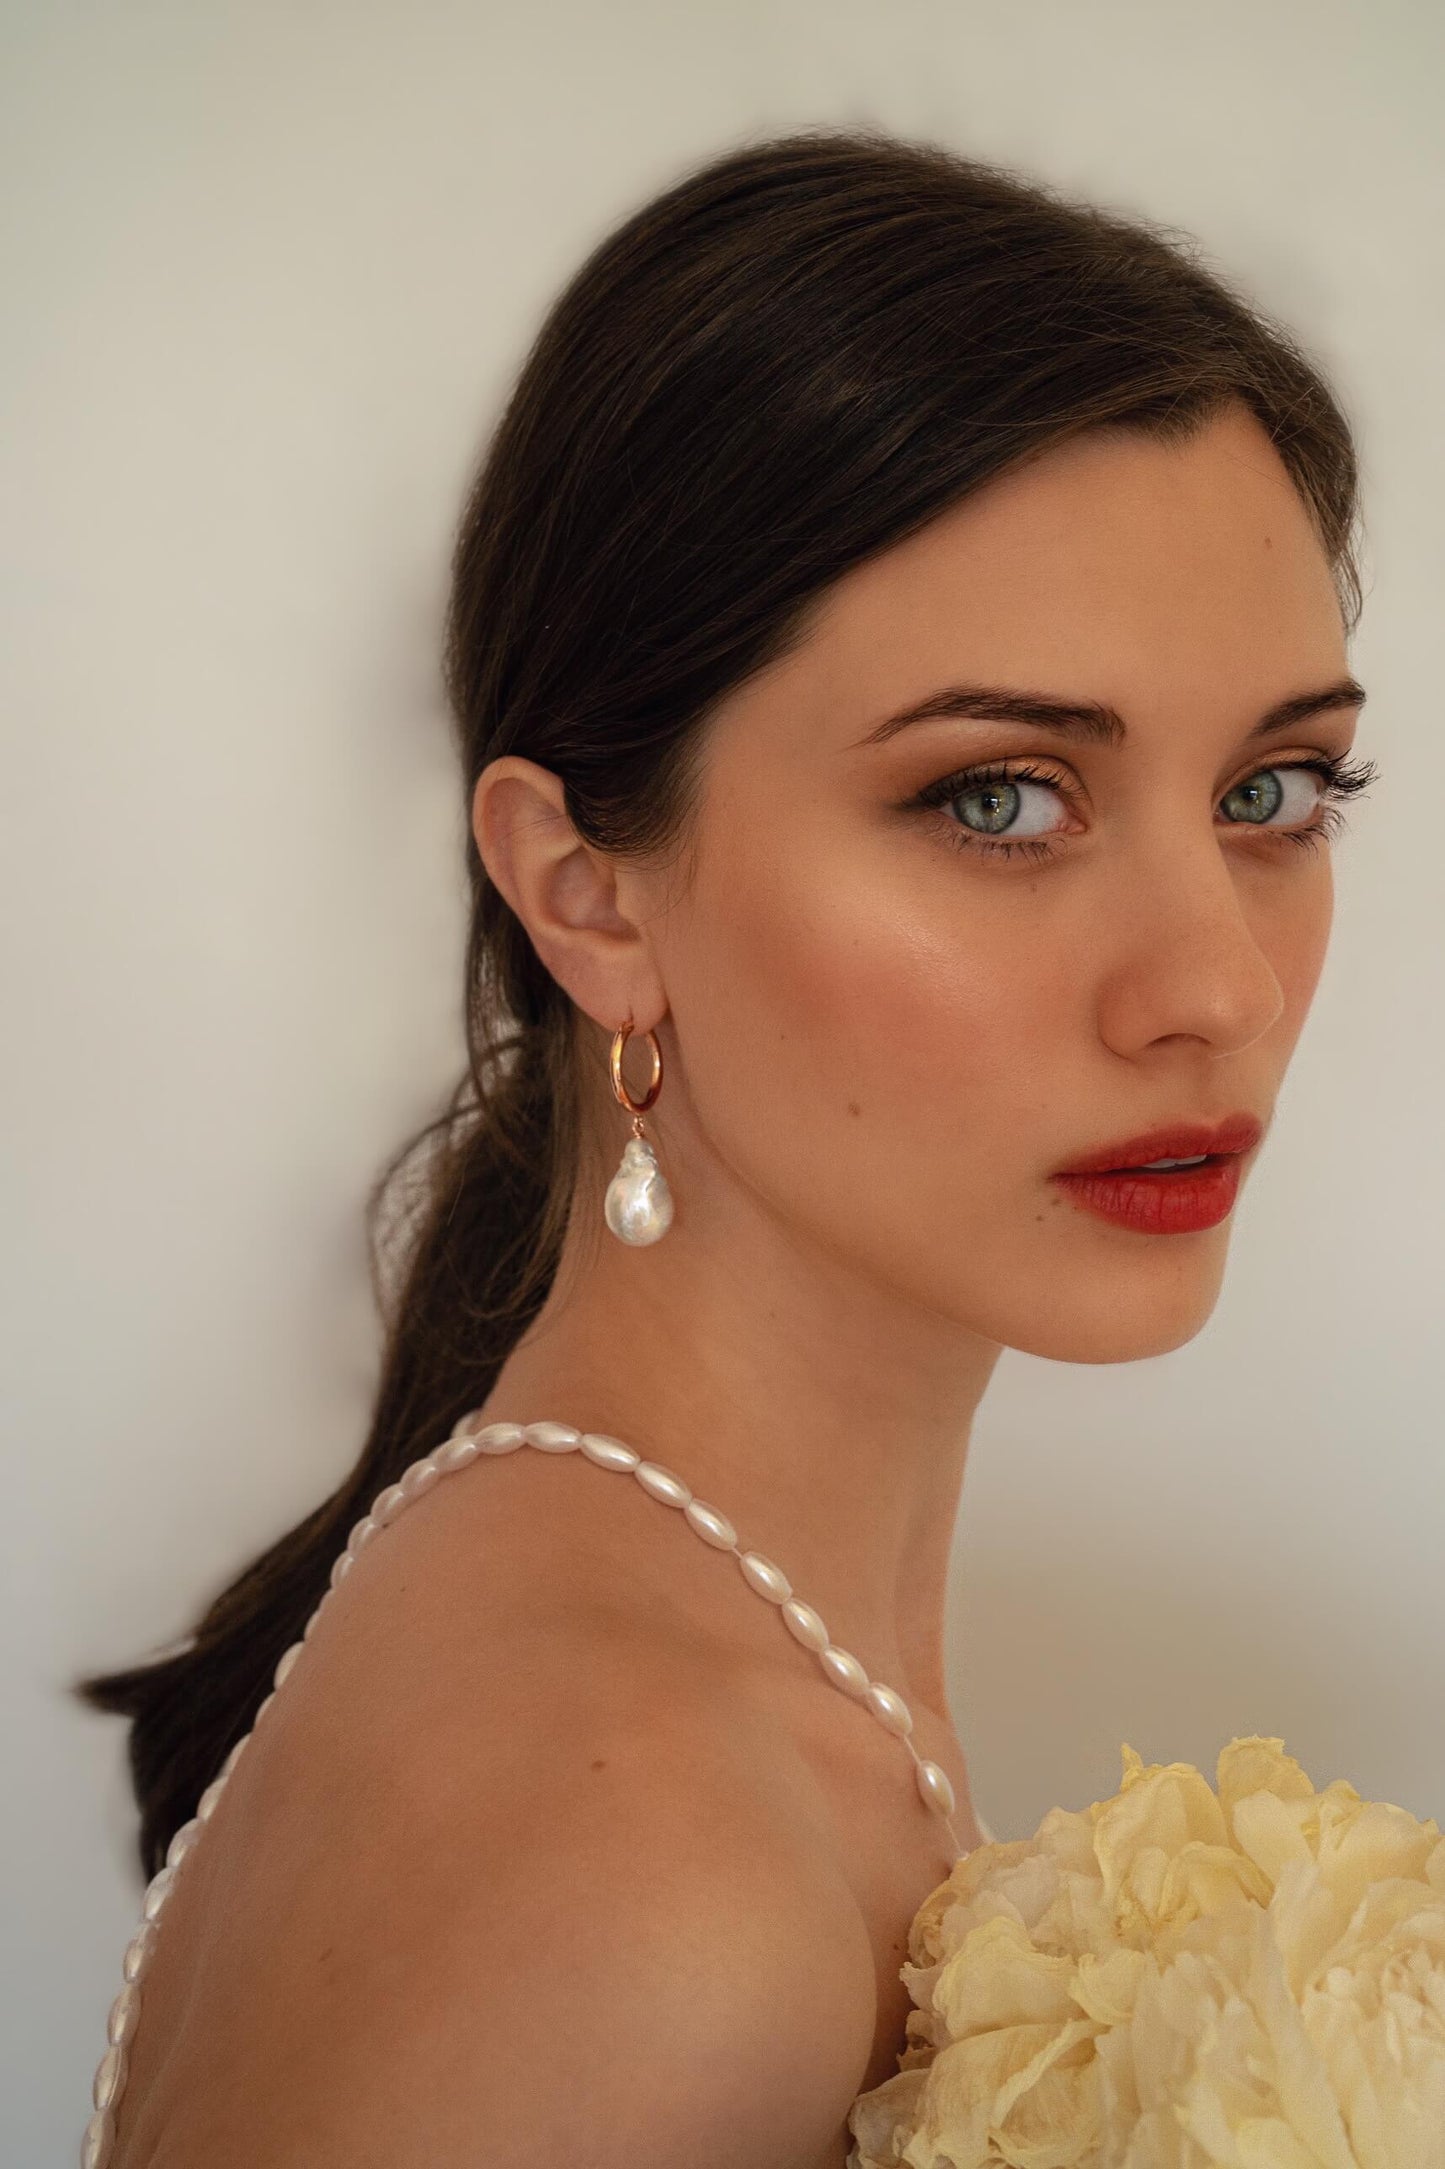 Bella Pearl Earrings